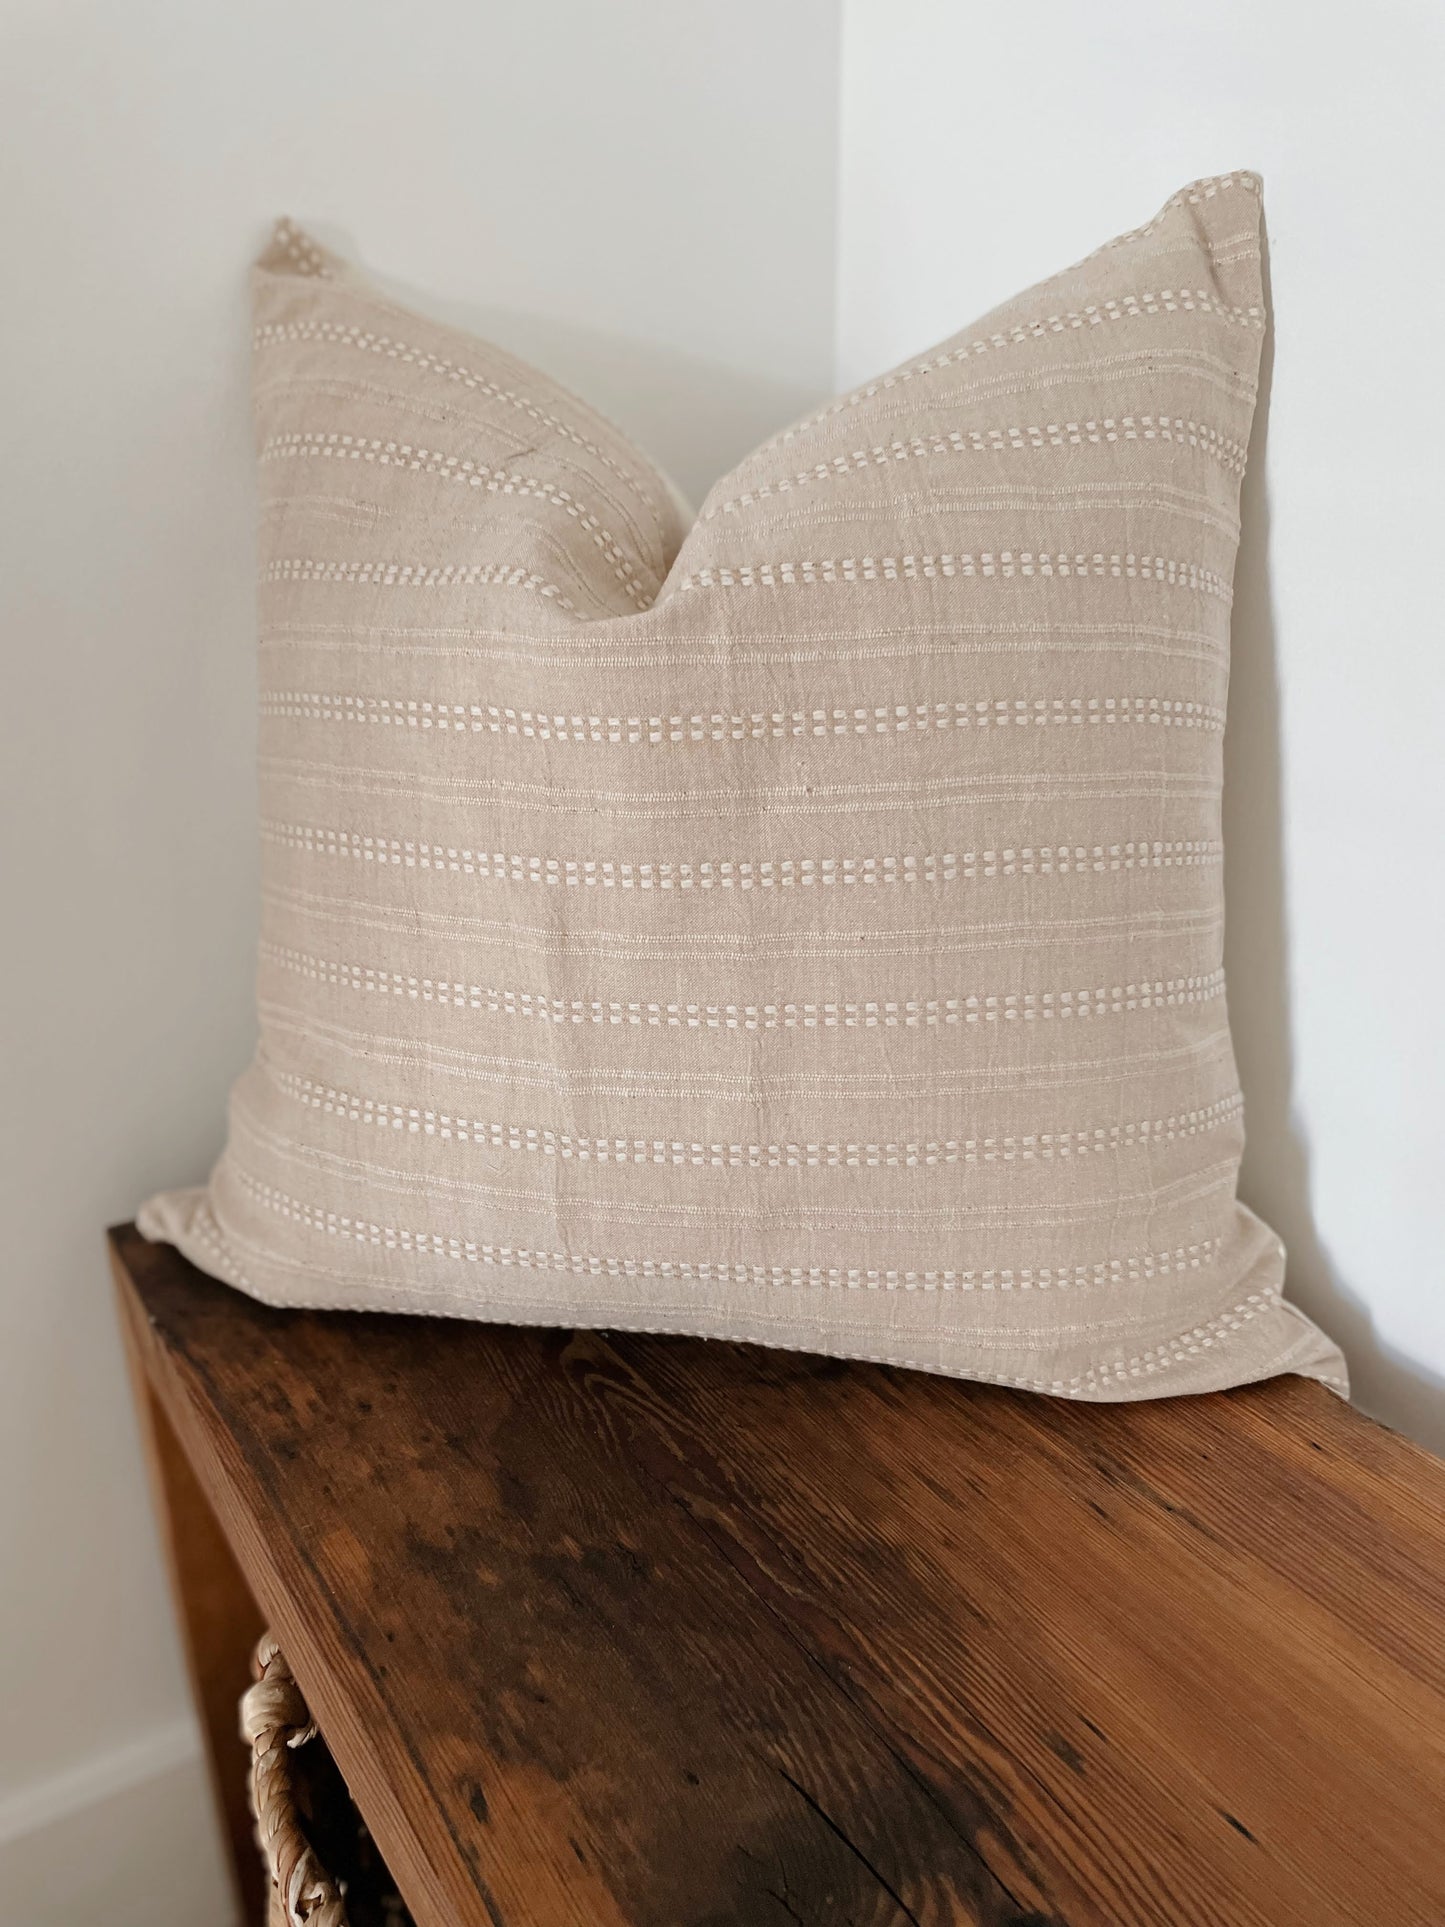 Desert Taupe Woven Pillow Cover